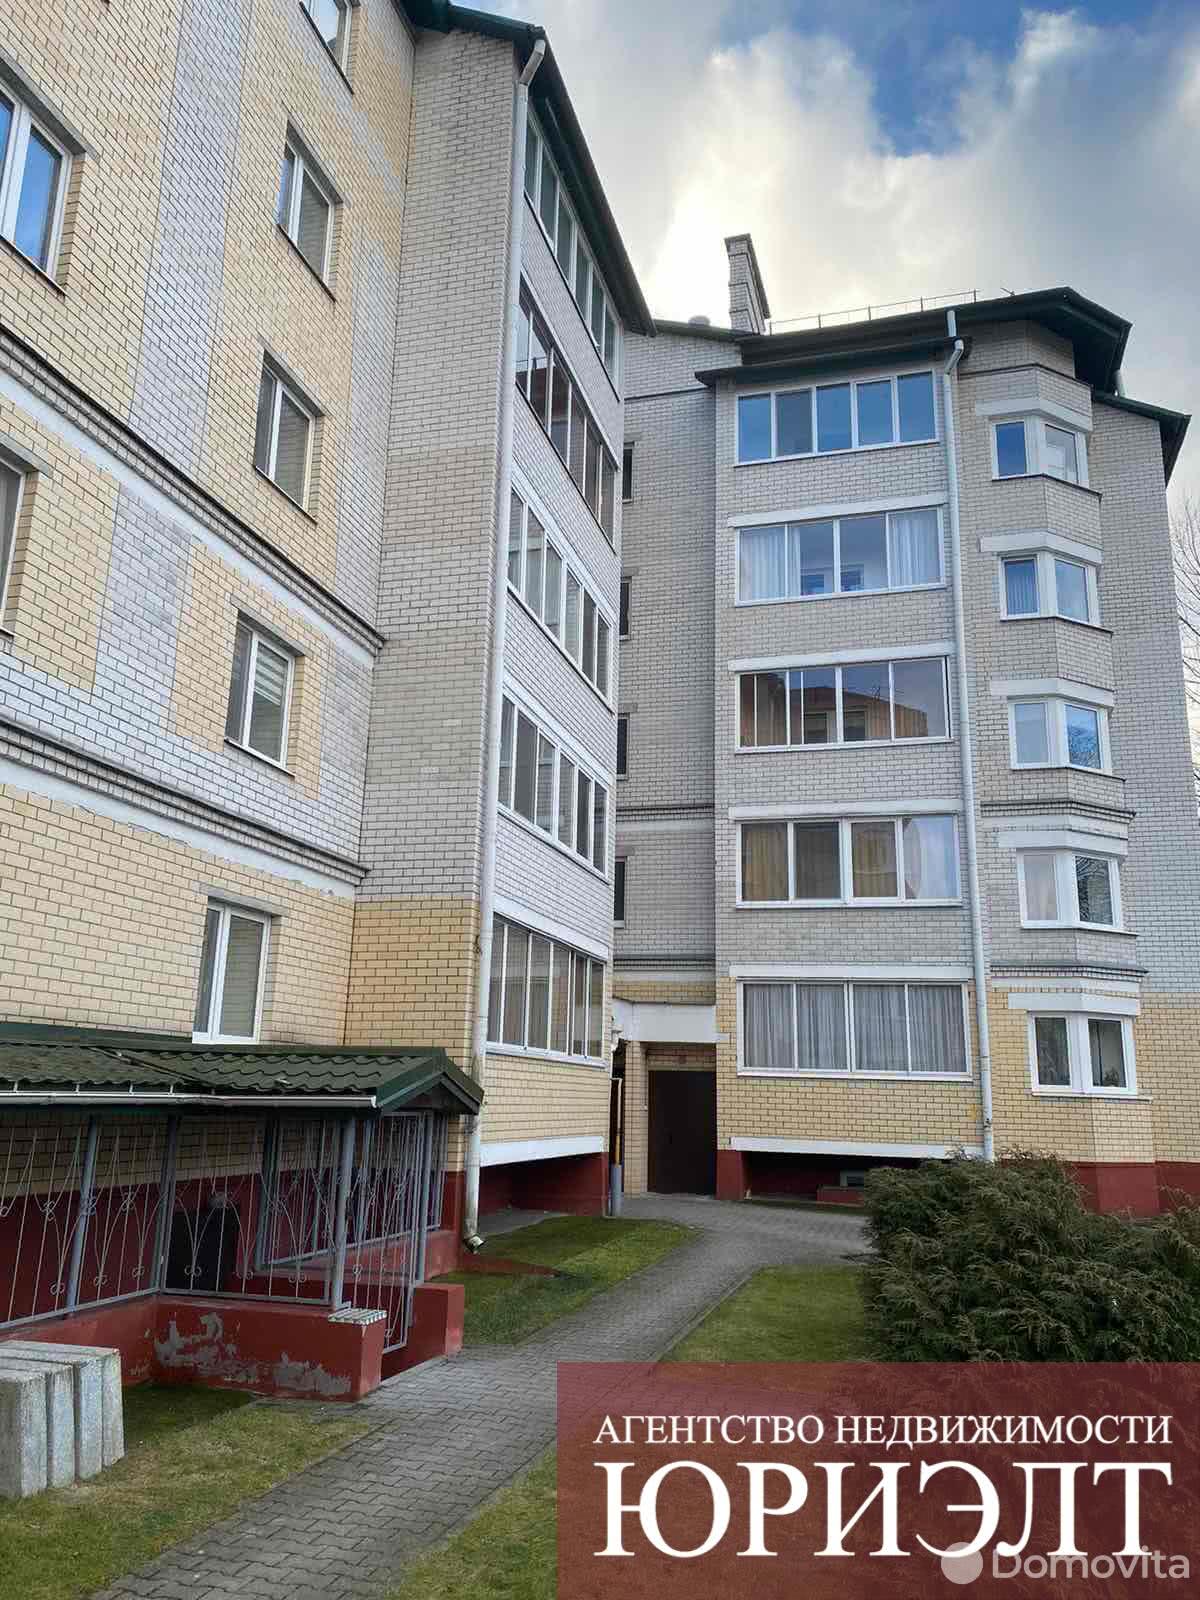 квартира, Брест, ул. Жукова, д. 1, стоимость продажи 146 362 р.